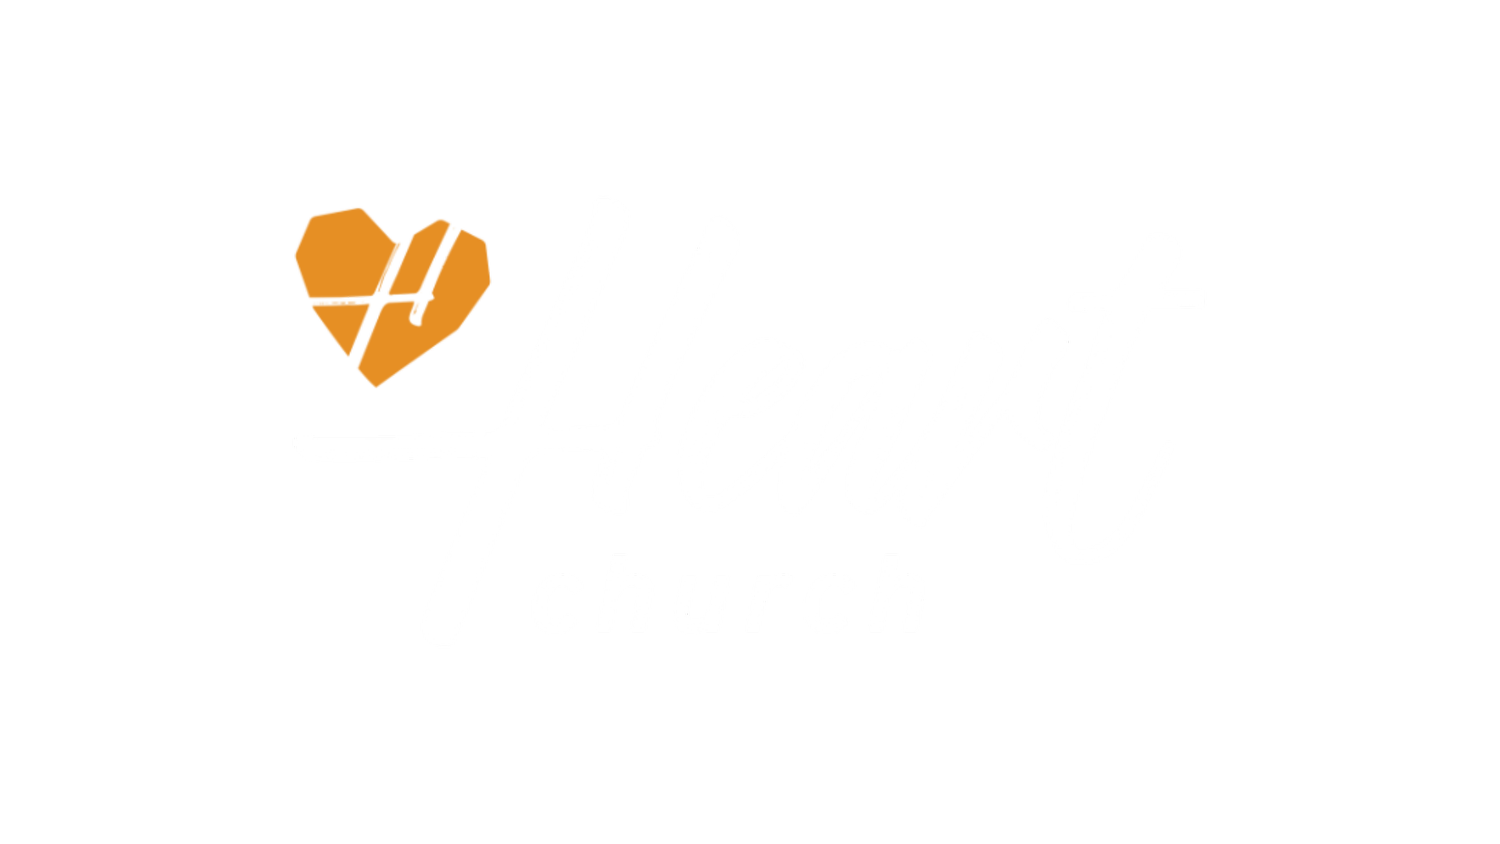 Heart Church